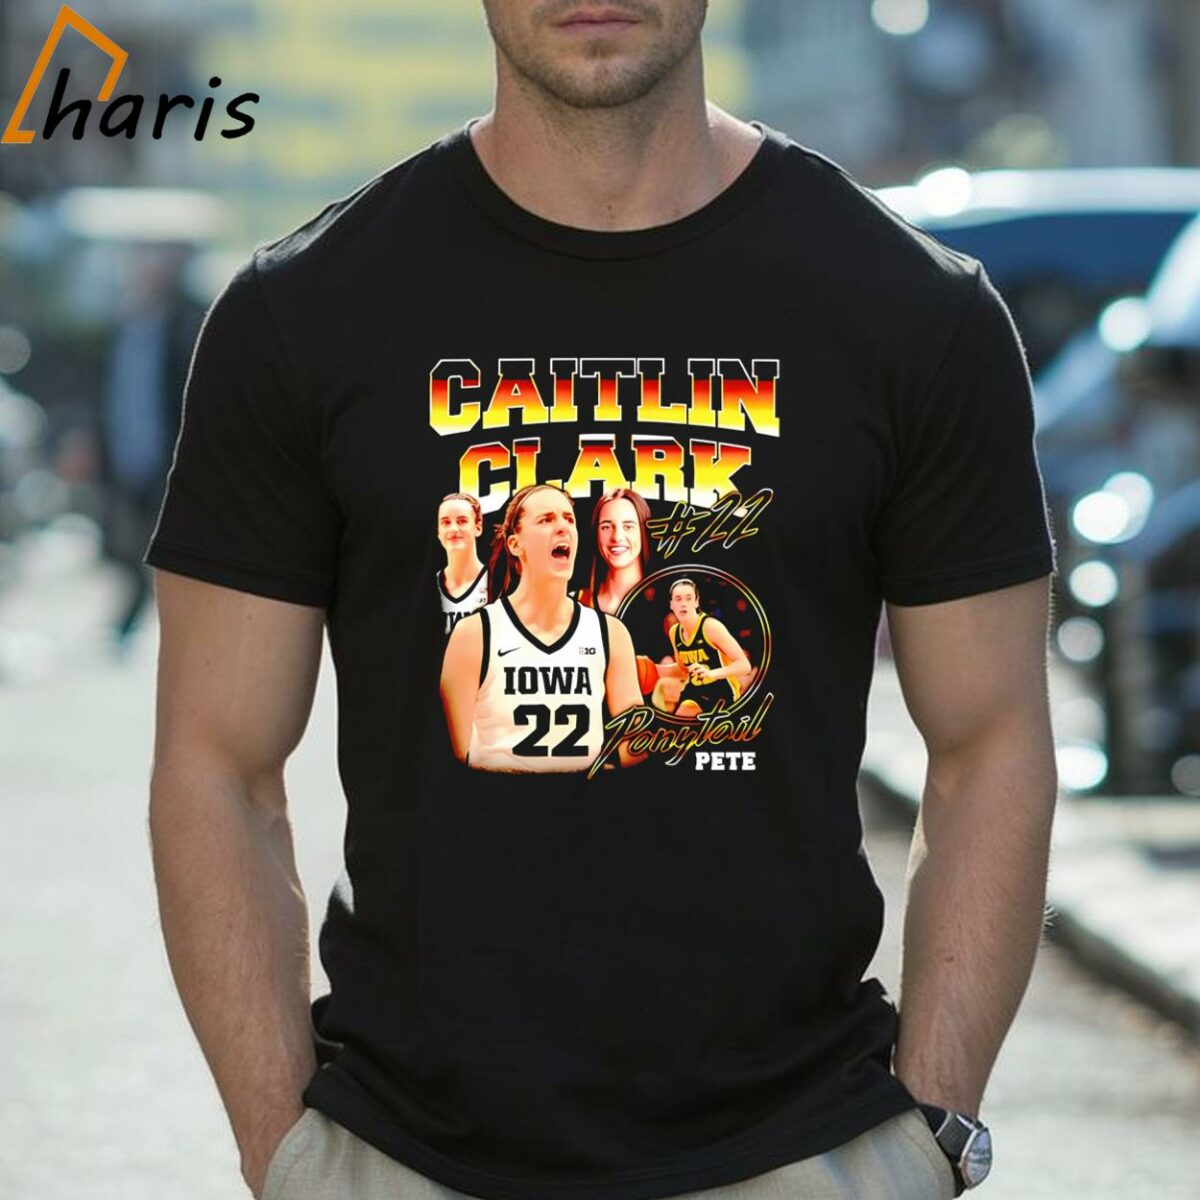 Caitlin Clark Ponytail Pete IOWA T shirt 2 Shirt